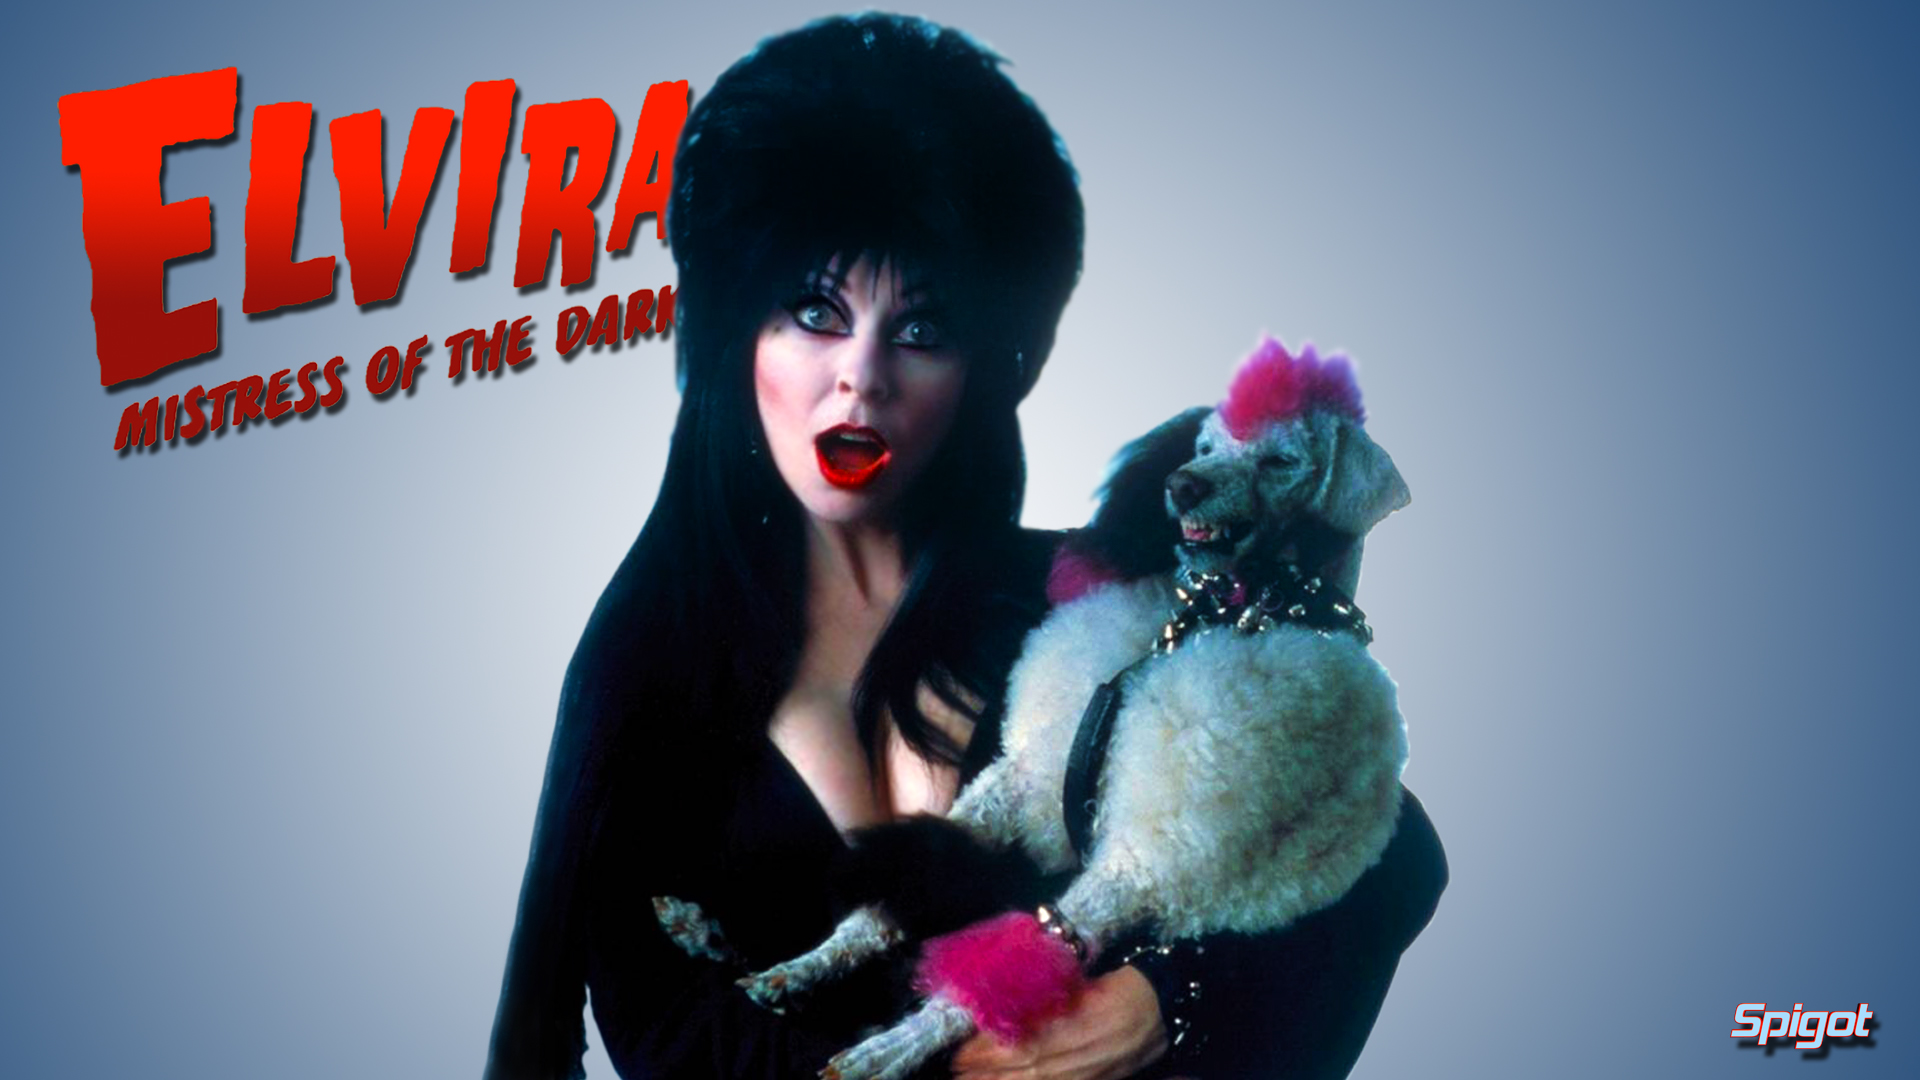 I - Elvira Mistress Of The Dark Gonk , HD Wallpaper & Backgrounds